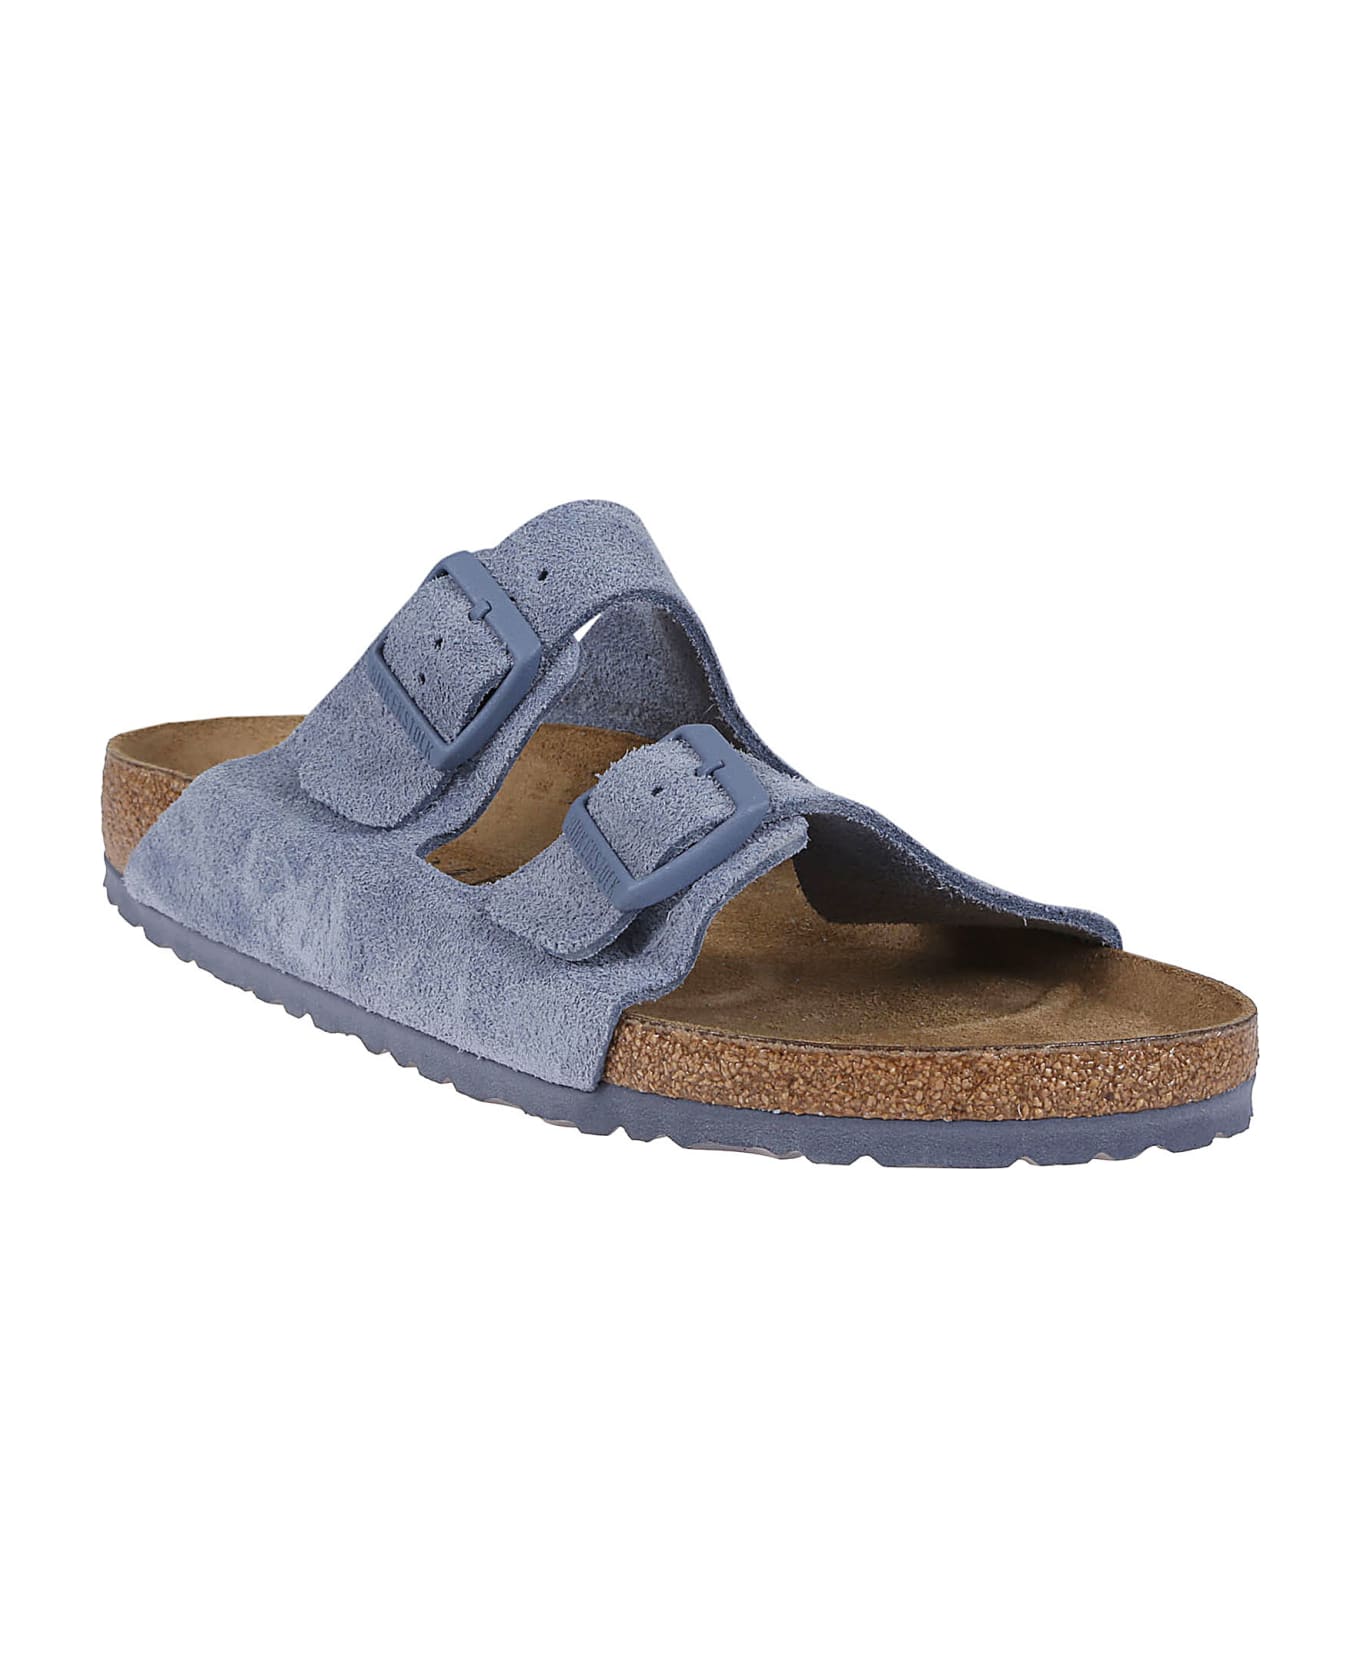 Birkenstock Arizona Sandals - Elemental Blue その他各種シューズ